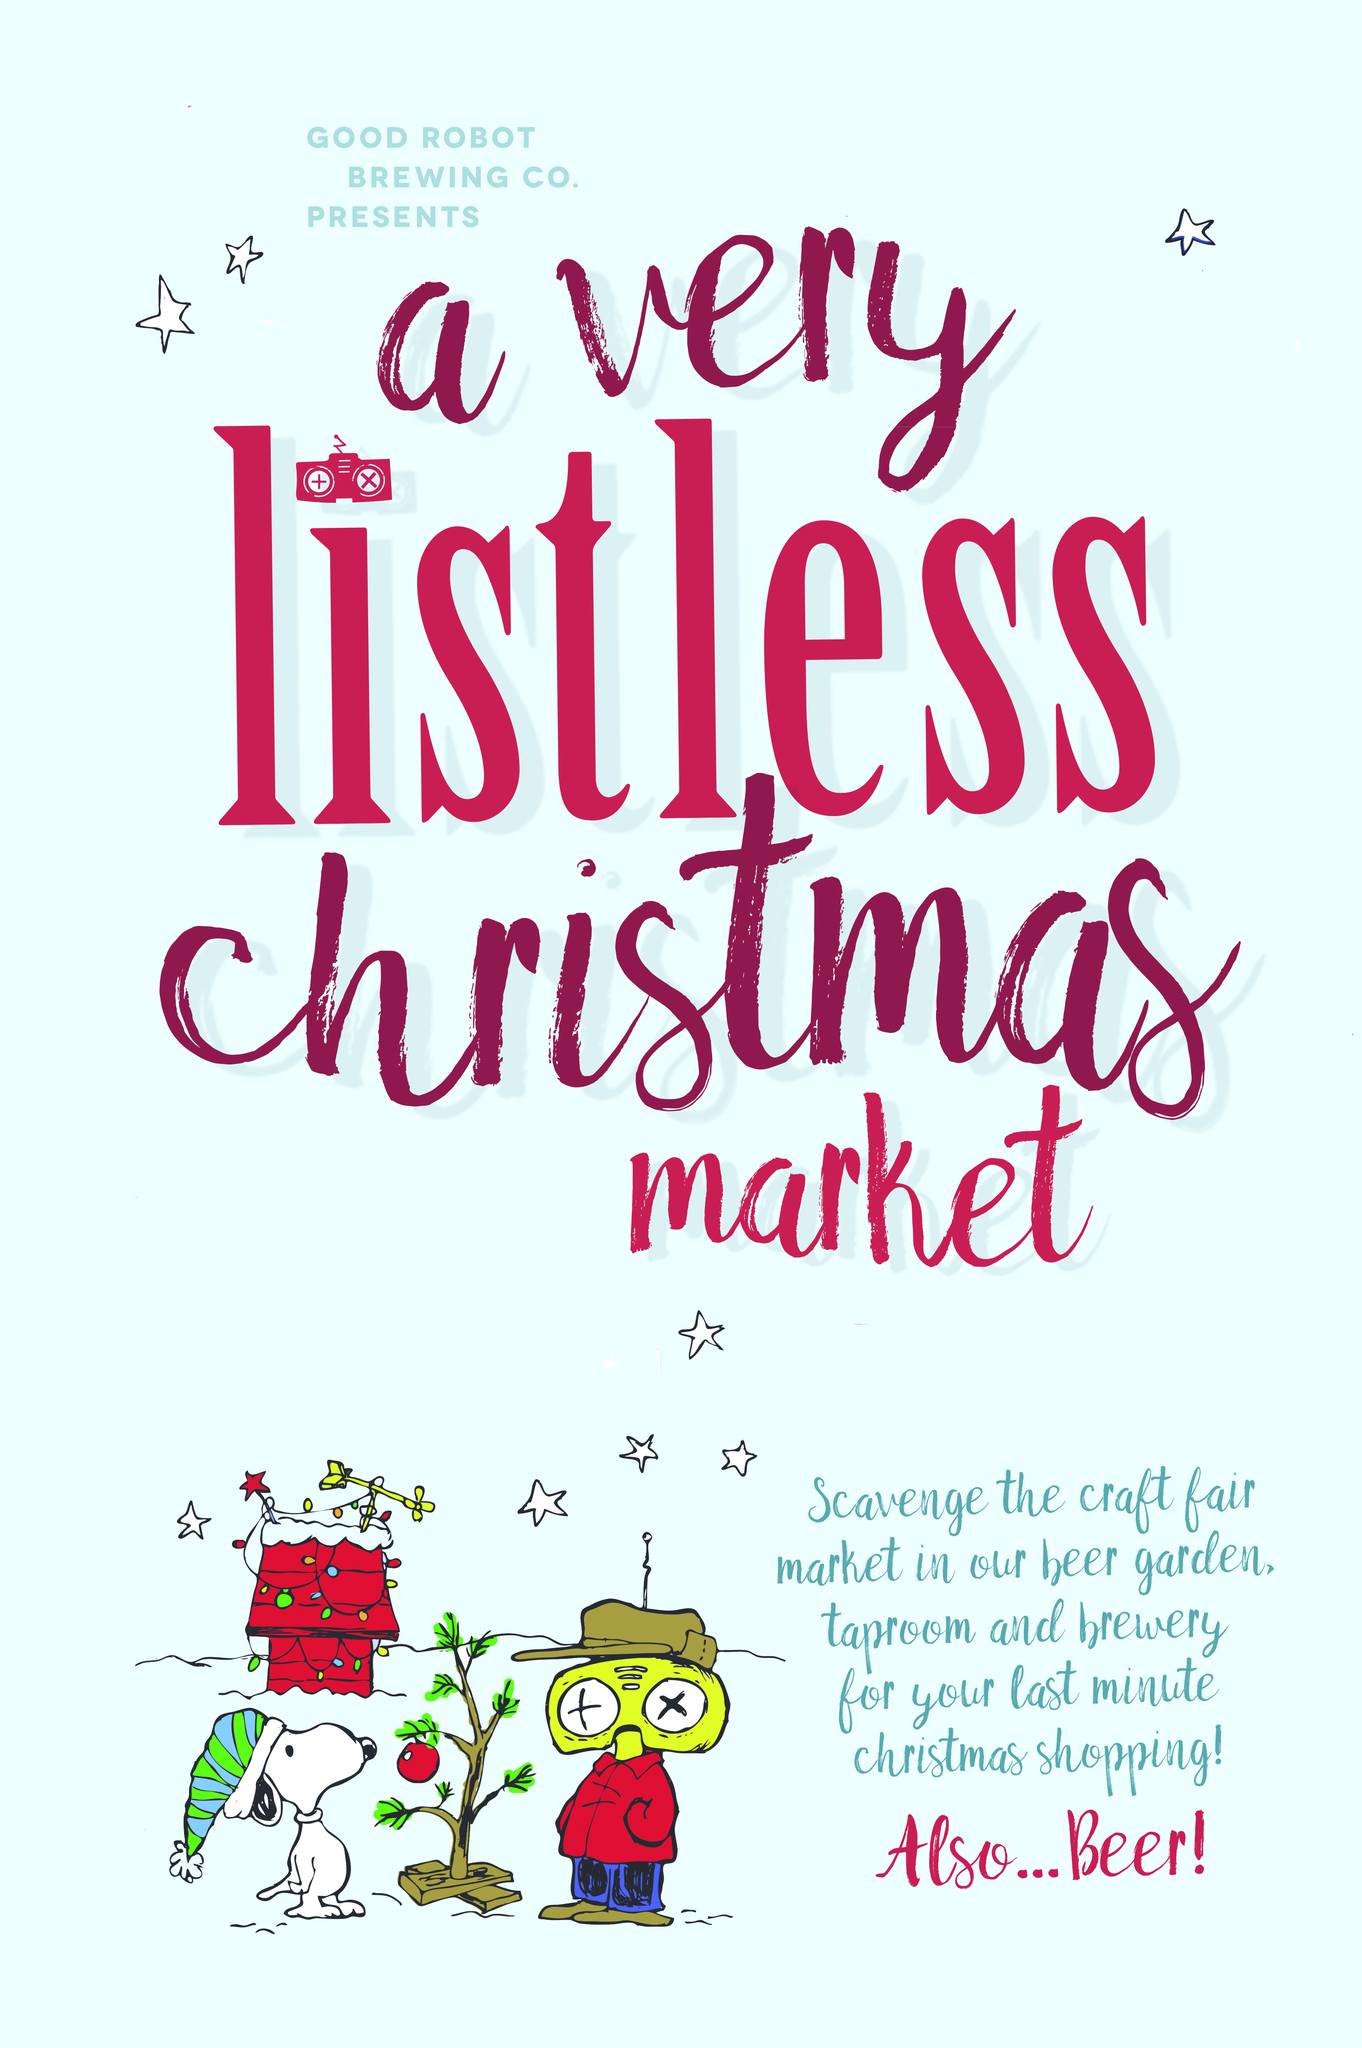 Listless Christmas Market